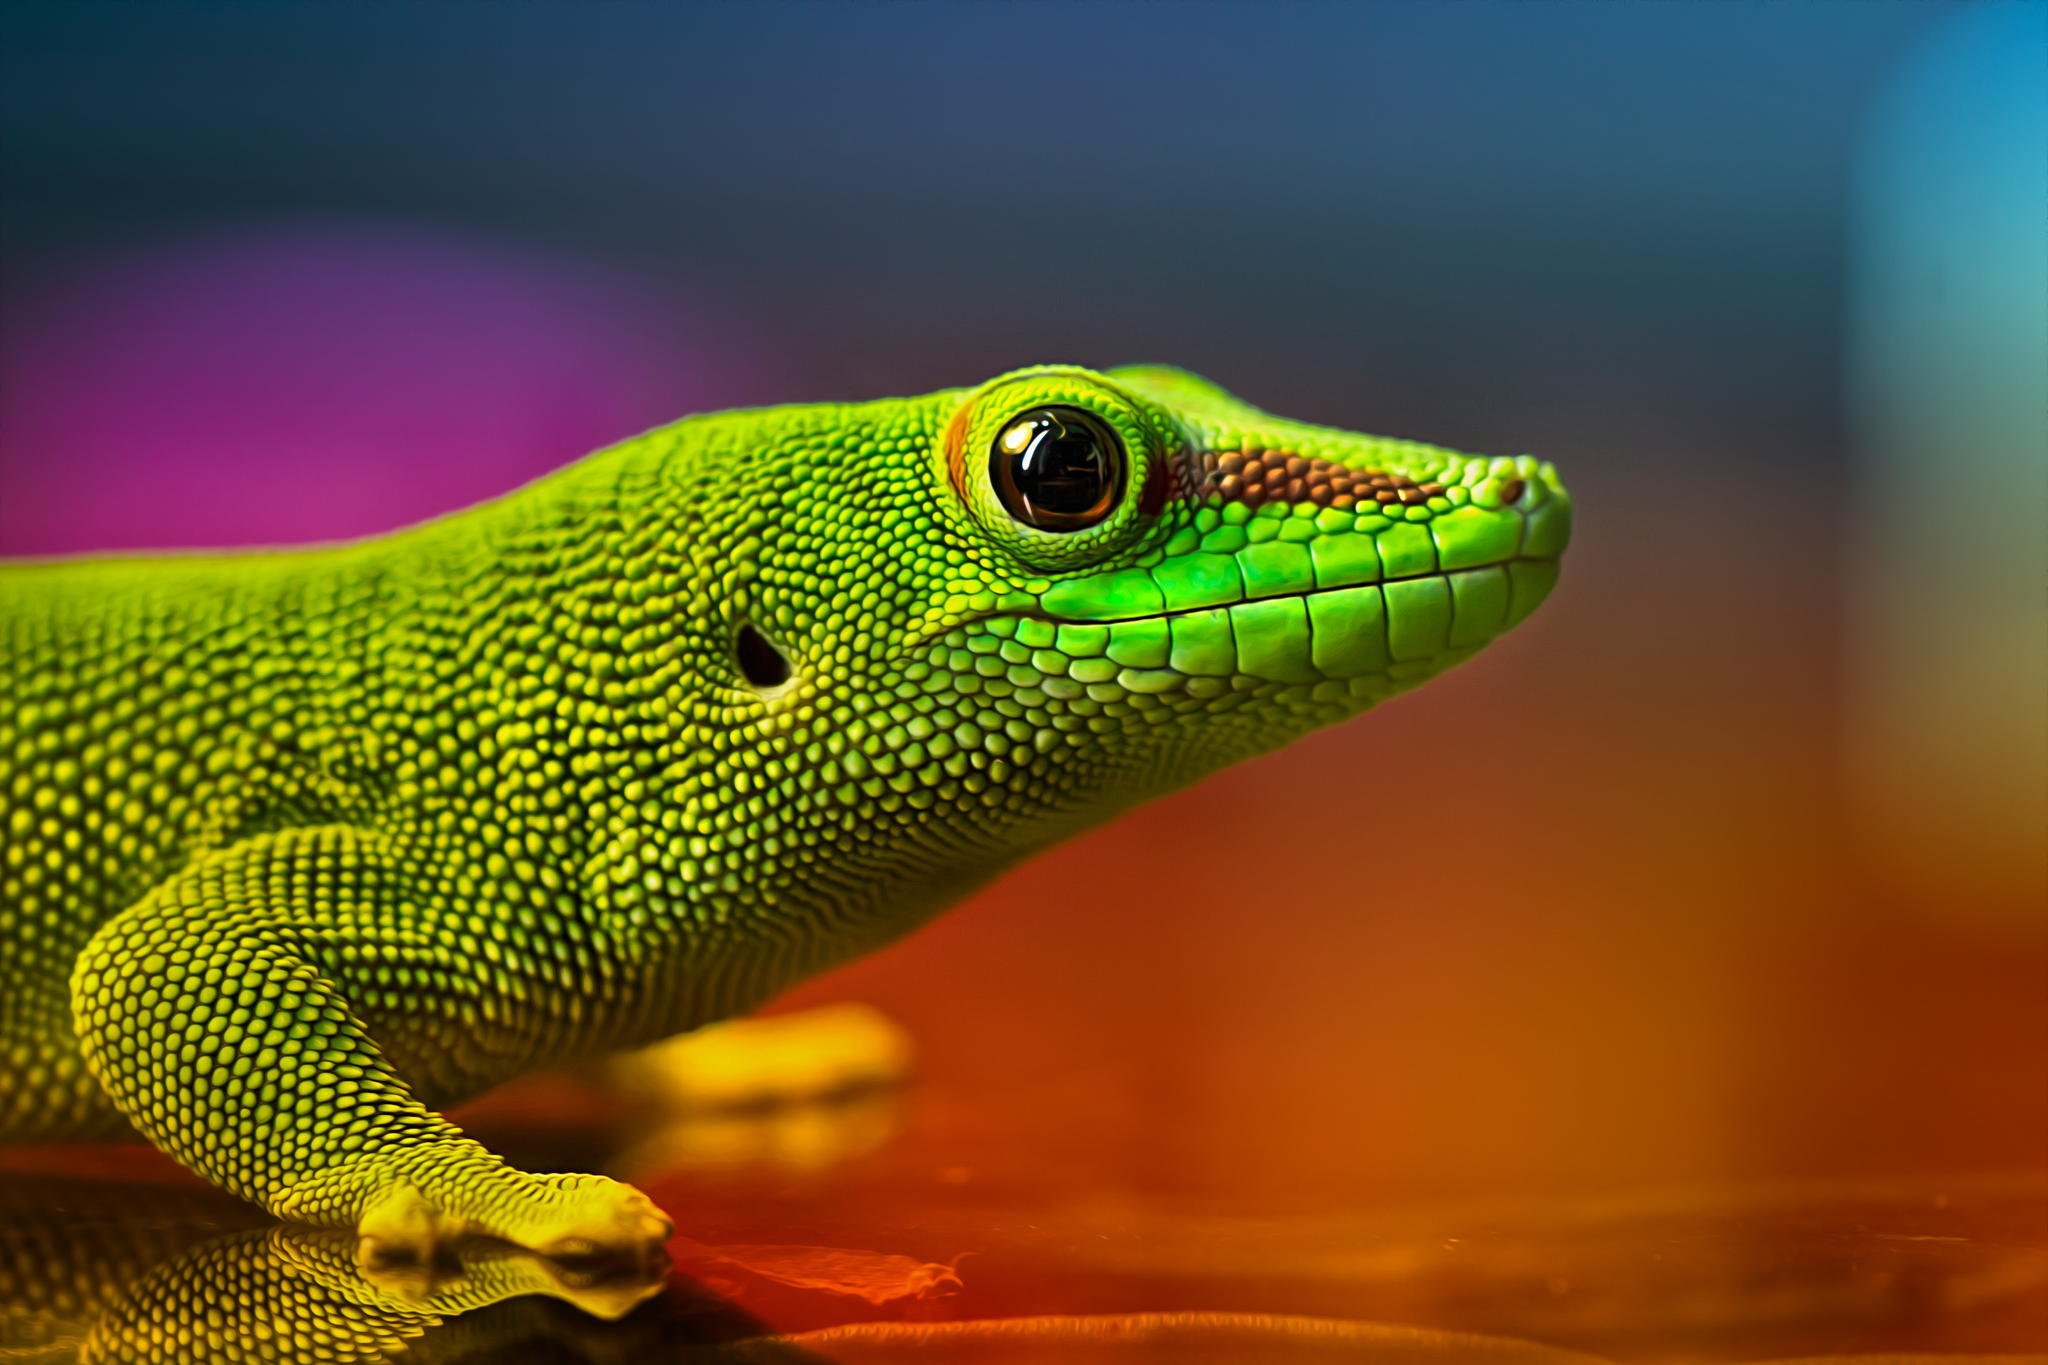 Lizard Reptile Green Iridescent Colors Wallpapers Hd Desktop And